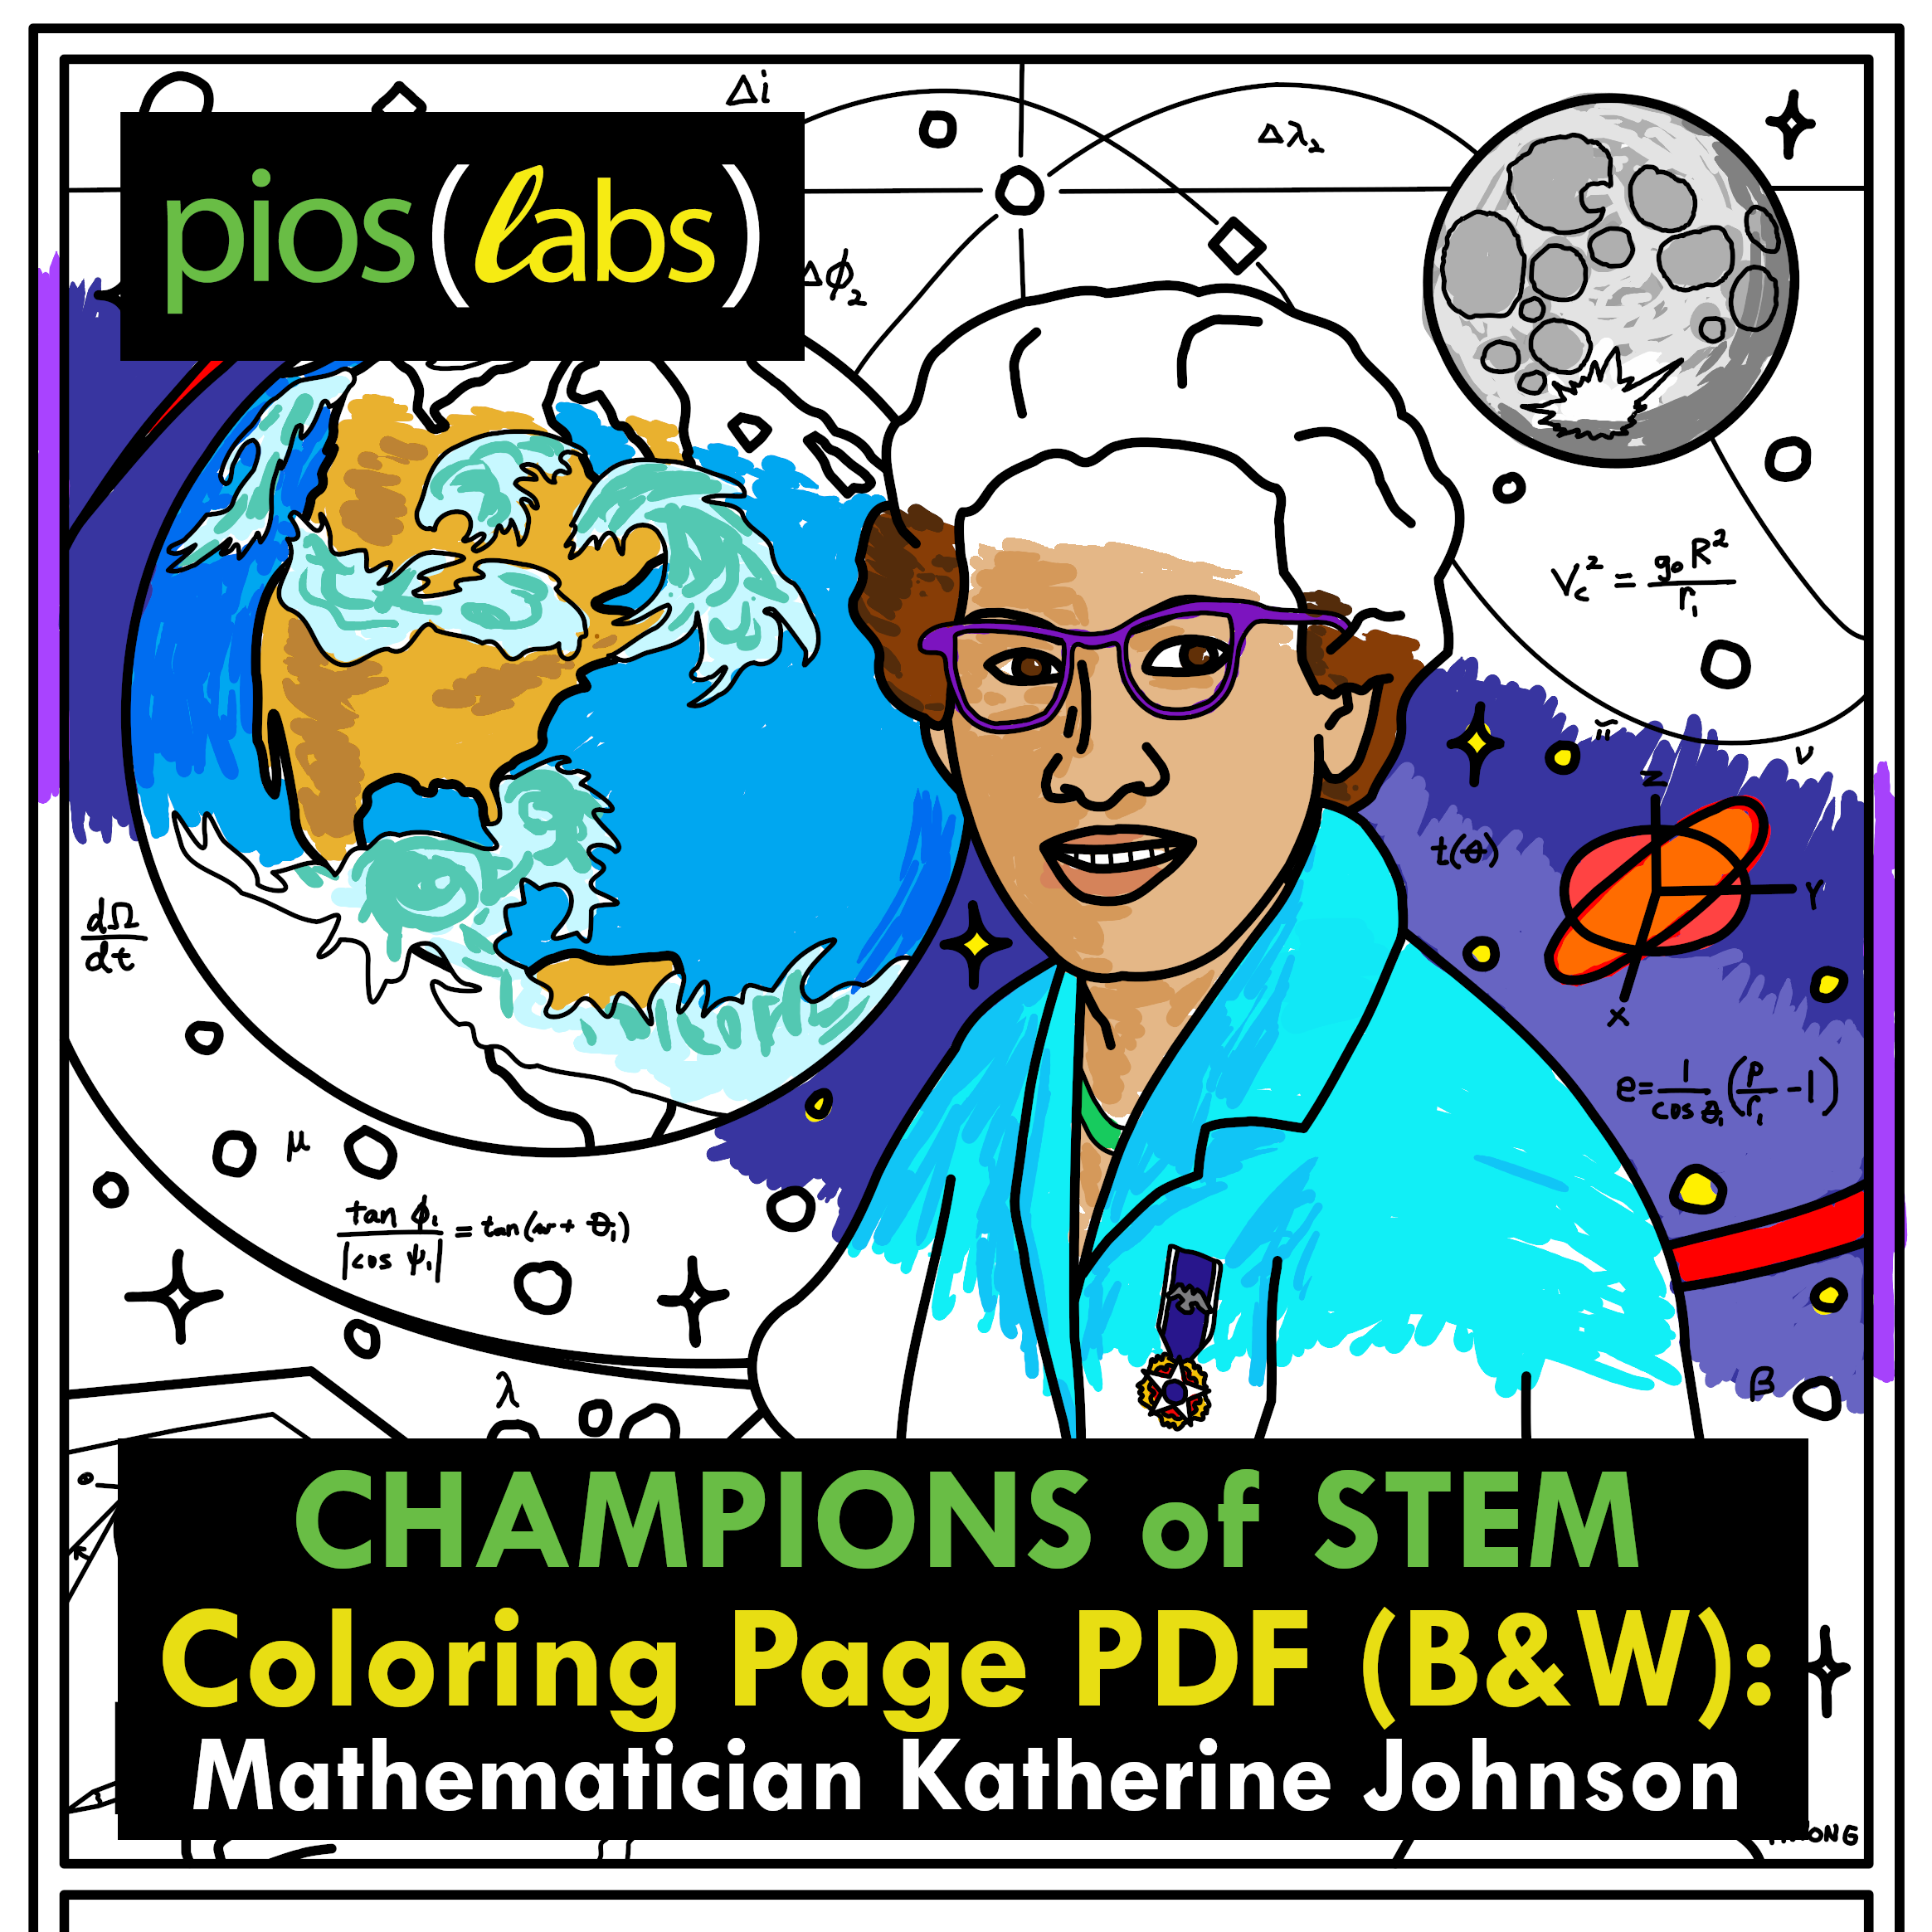 STEM Coloring Page/Poster, B&W PDF: Mathematician Katherine Johnson, NASA aerospace technologist (Champions of STE